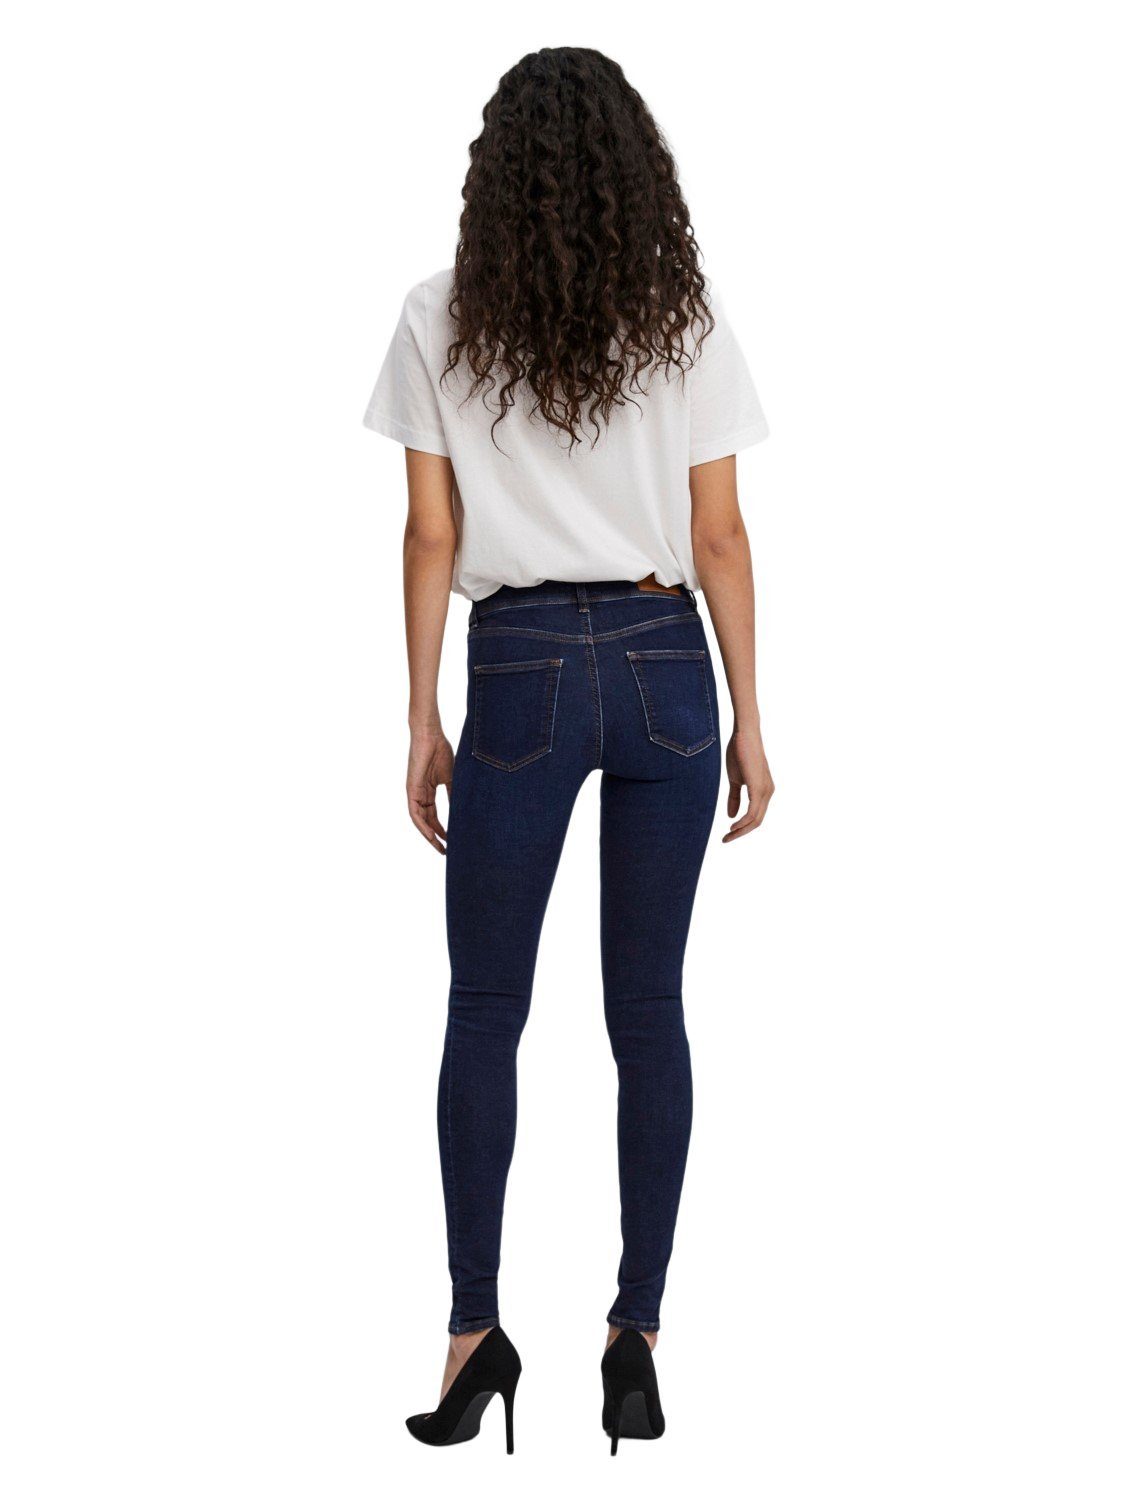 Moda Slim-fit-Jeans Vero LUX mit Stretch